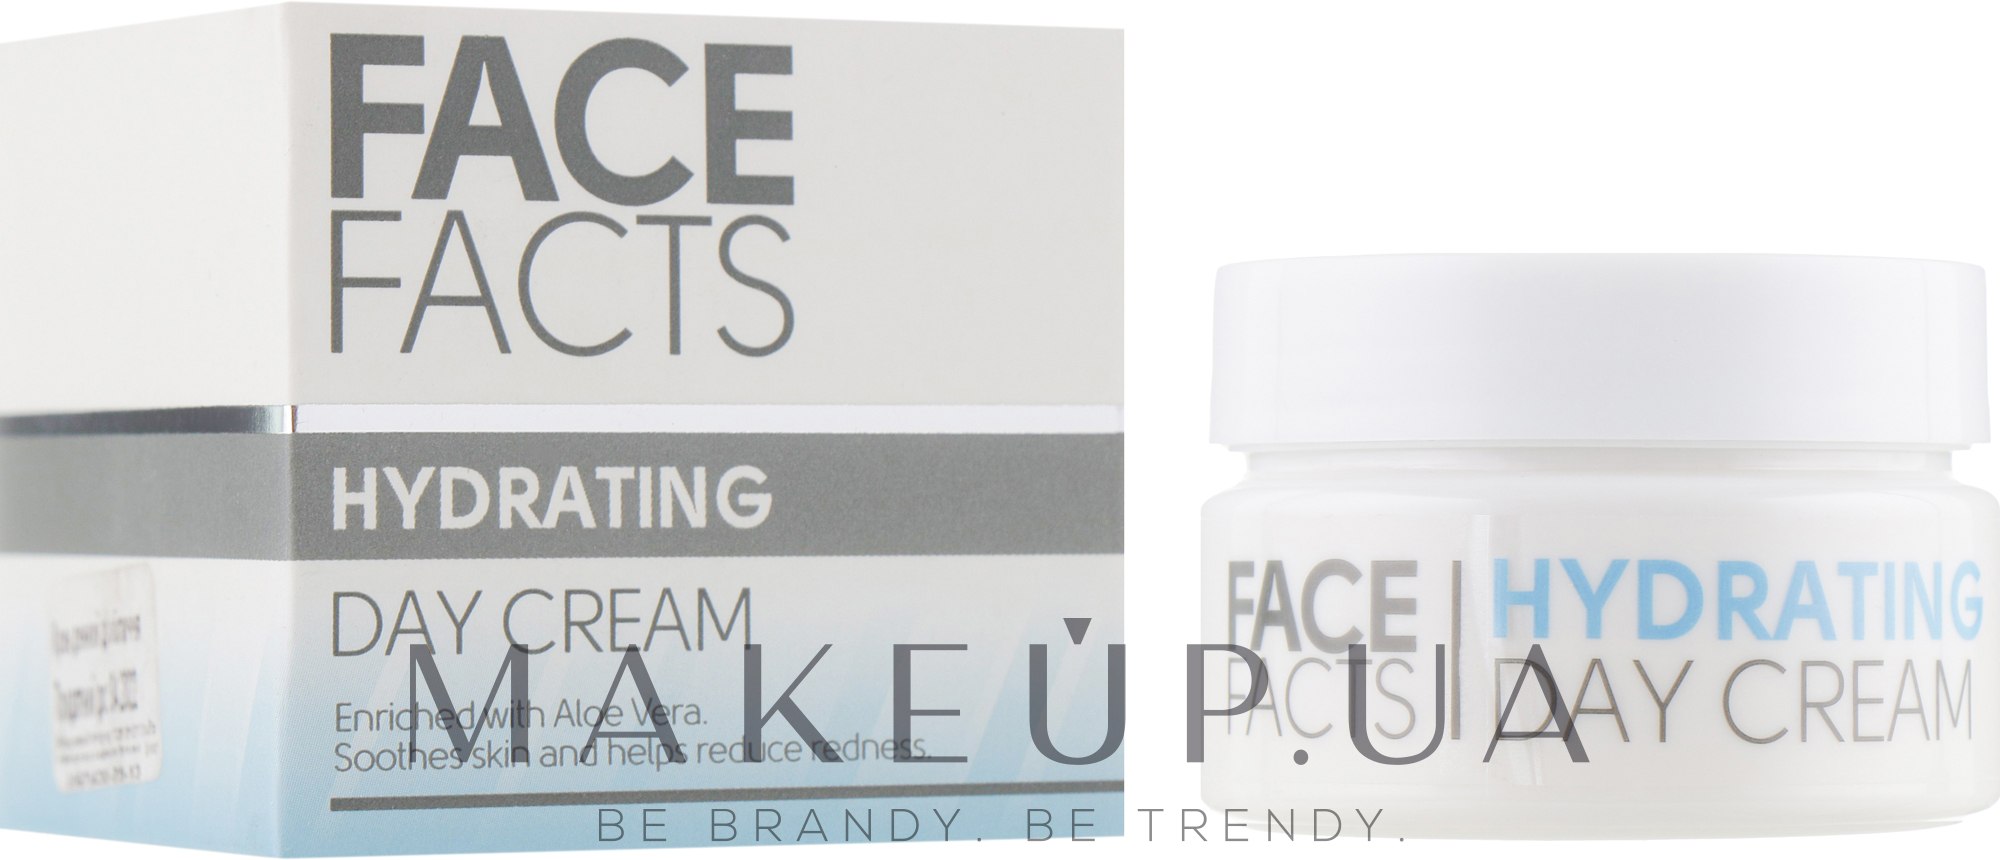 Face facts. Face facts крем. Apika крем дневной. Face facts сыворотка для лица 30 мл. Juvli Hydrating face Cream Cream Review.